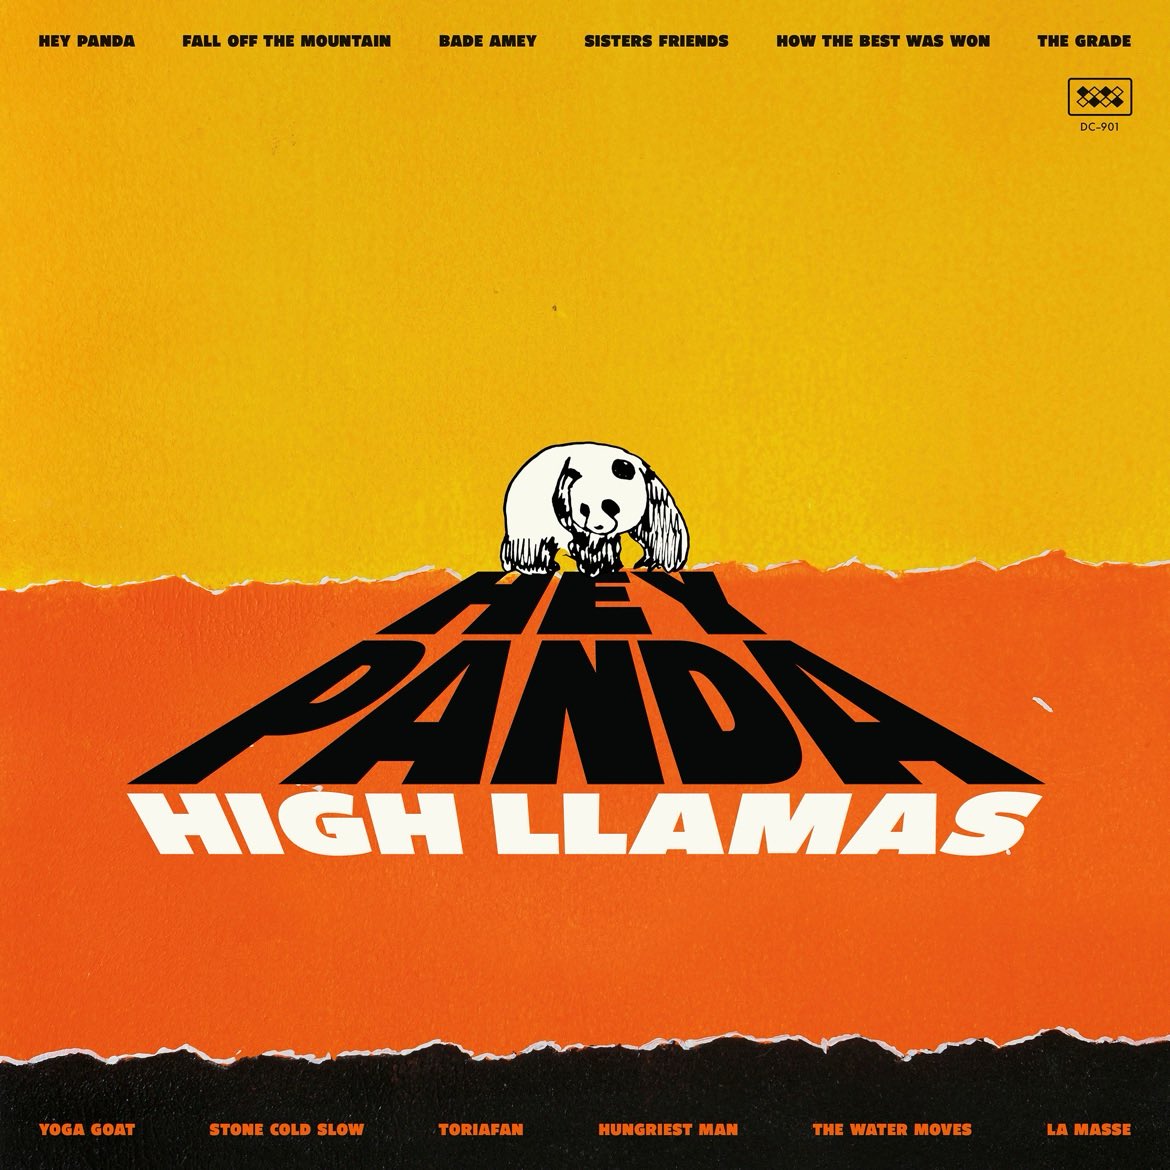 #Nowplaying La Masse (feat. Fryars) - The High Llamas (Hey Panda)

余韻に浸っている